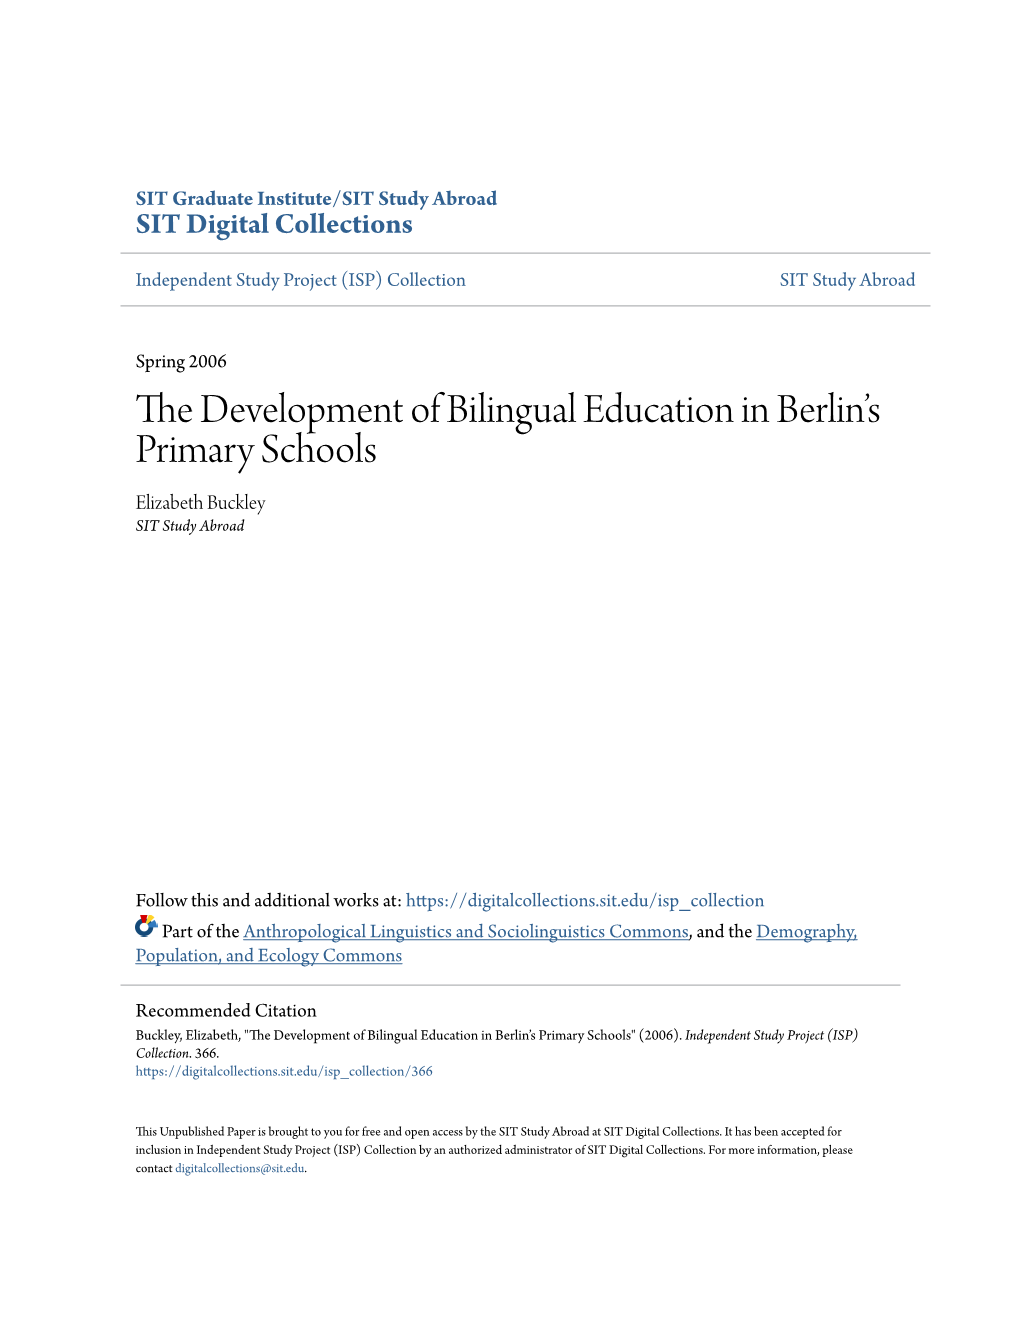 The Development of Bilingual Education in Berlin's Primary Schools